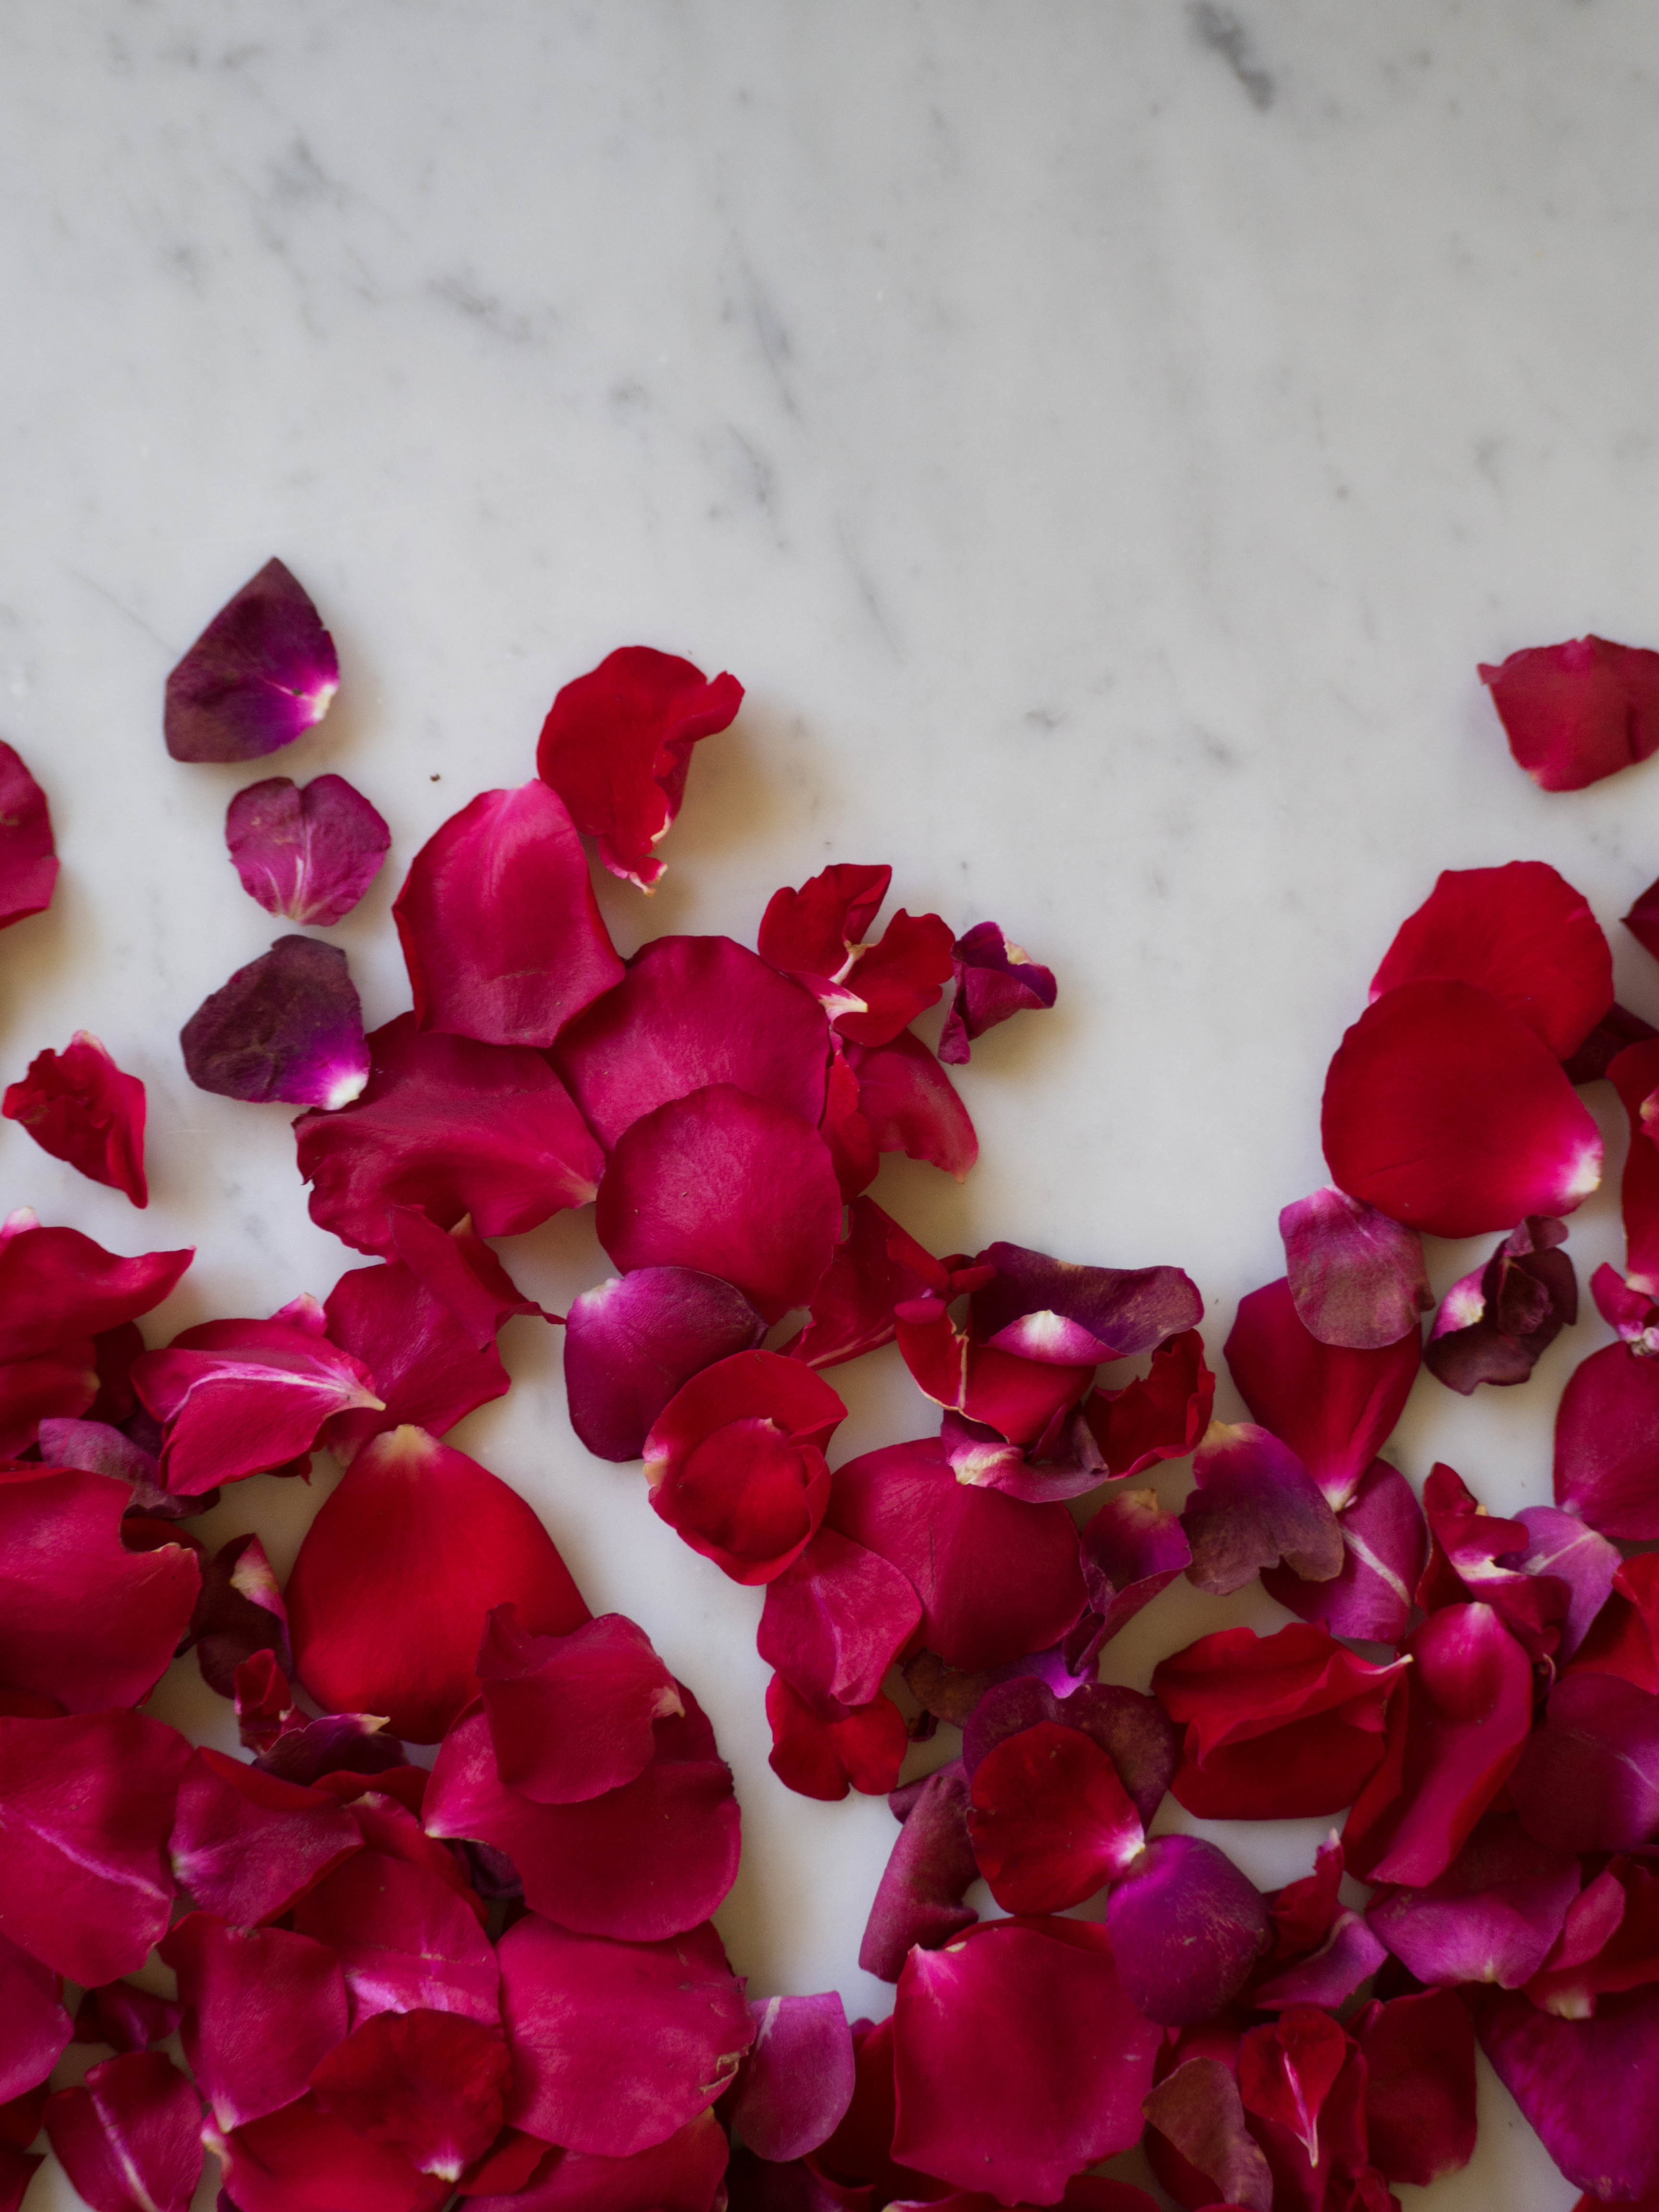 Homemade Crystallised Rose Petals Recipe 